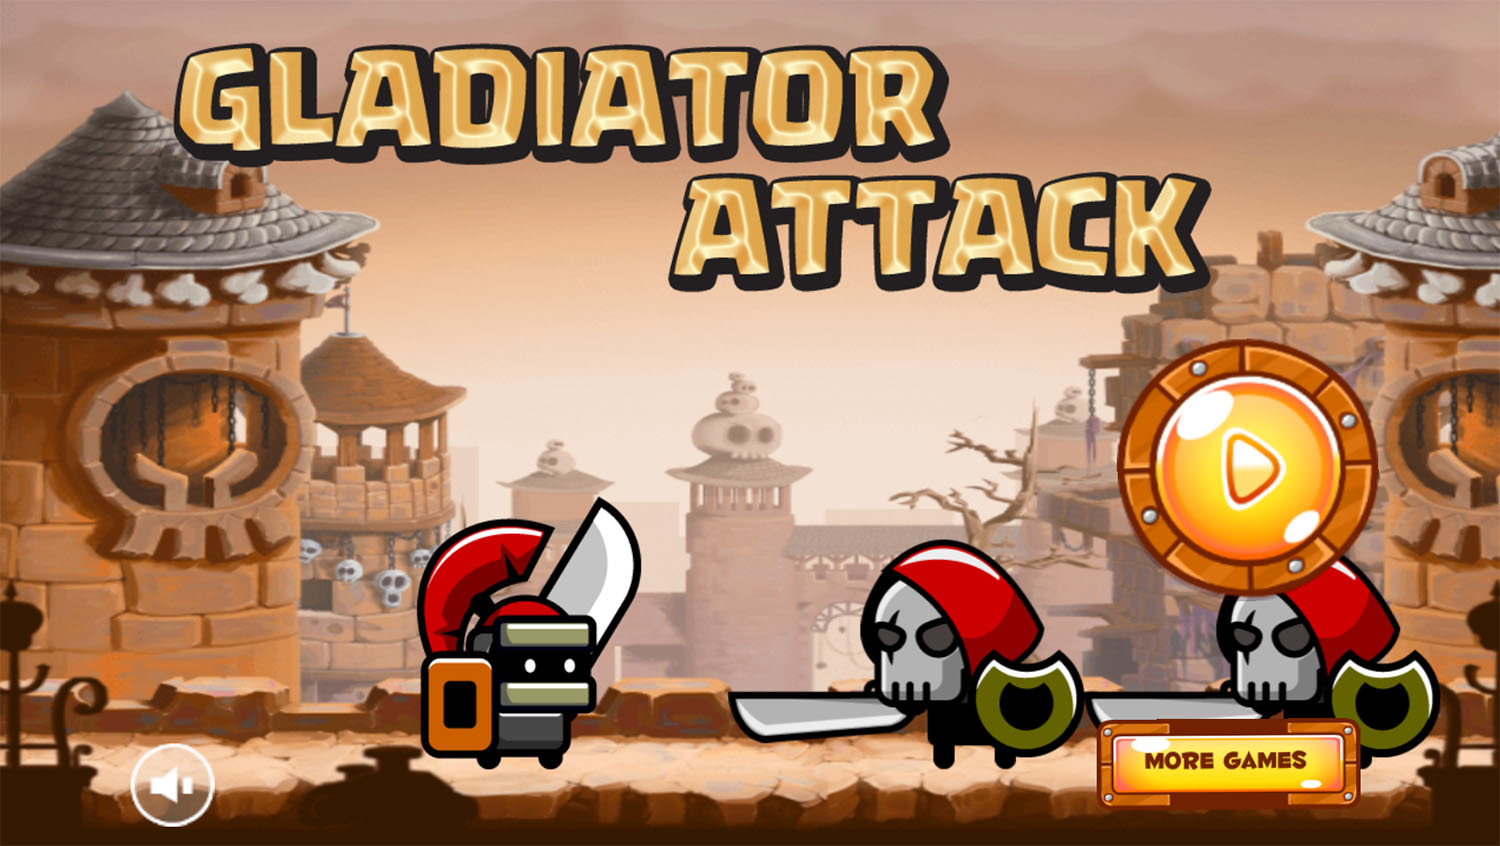 Gladiator Attack Game Welcome Screen Screenshot.